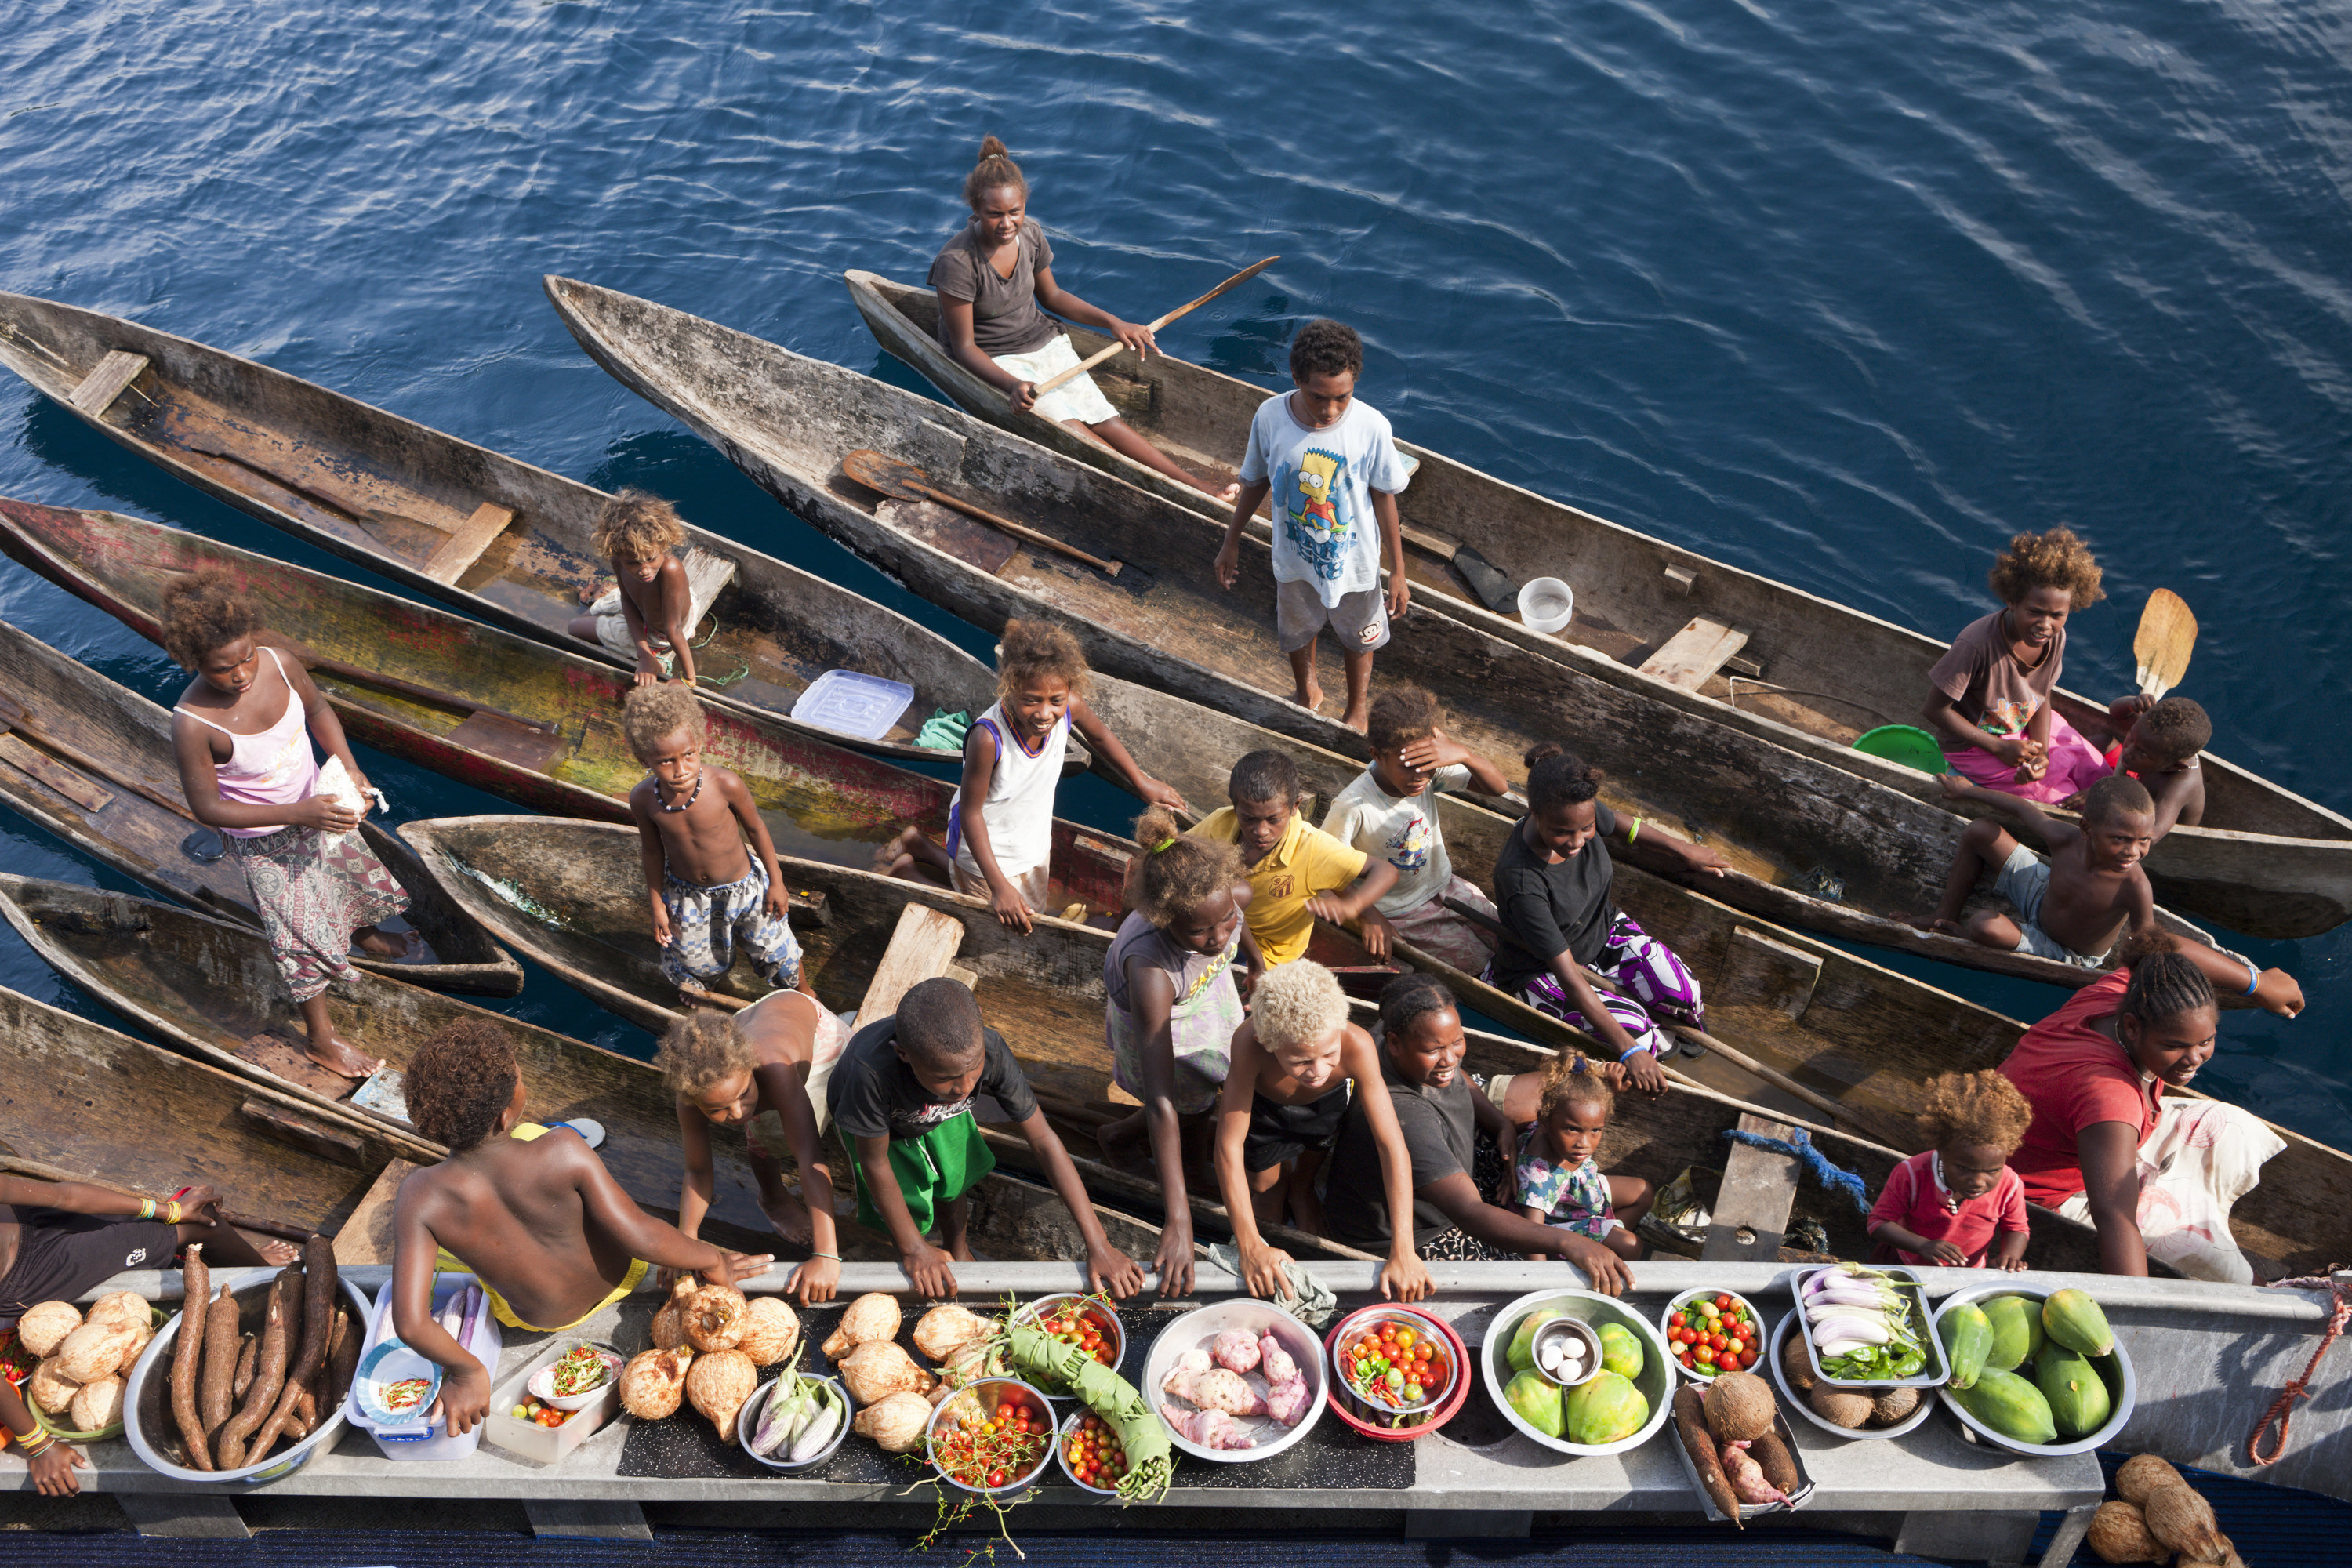 People on boats in the Solomon Islands